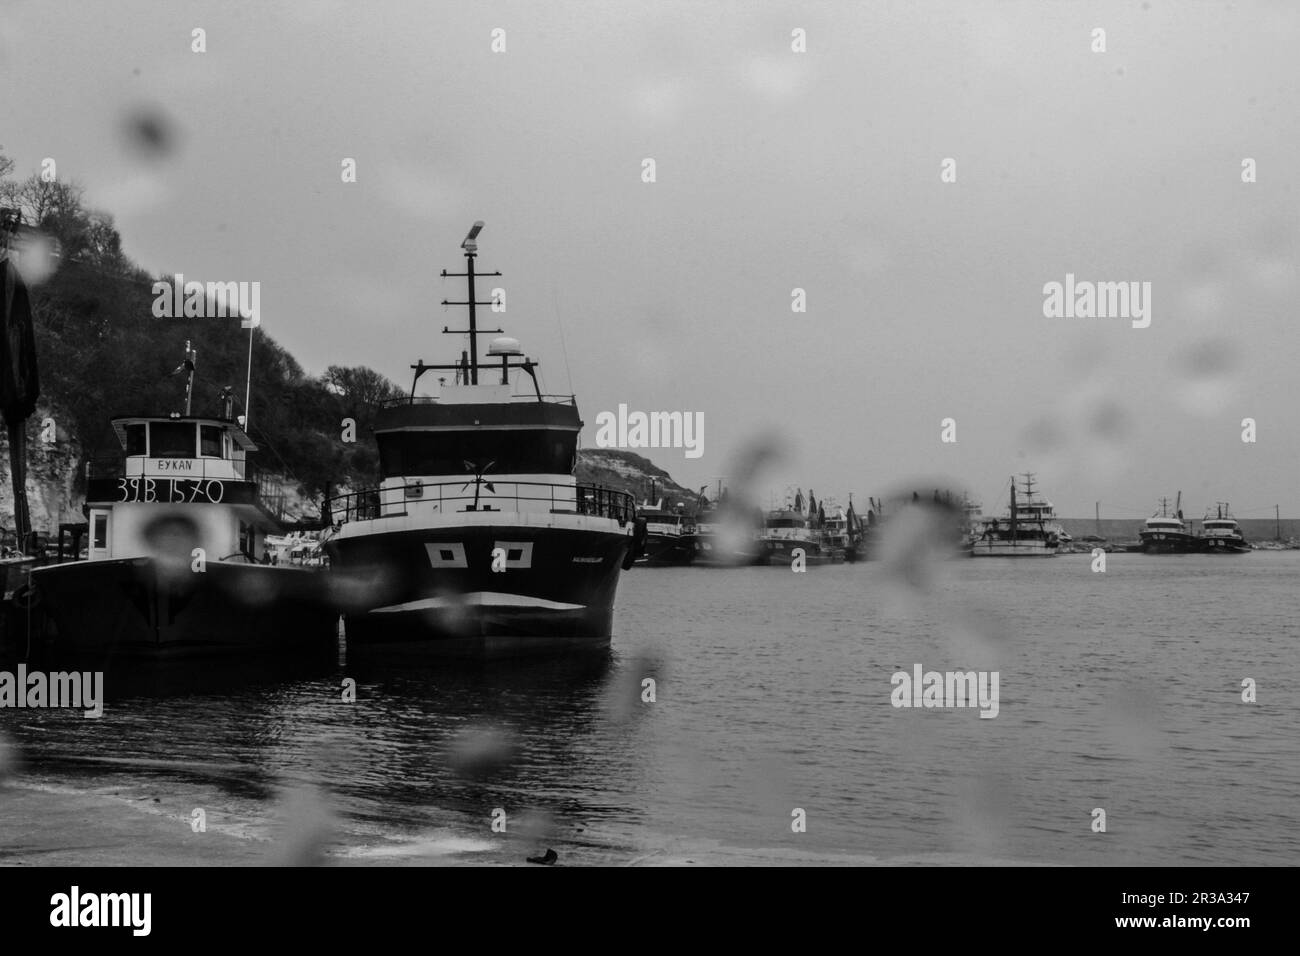 two seaboats on a rainy day in Kıyıköy, Kırklareli Stock Photo